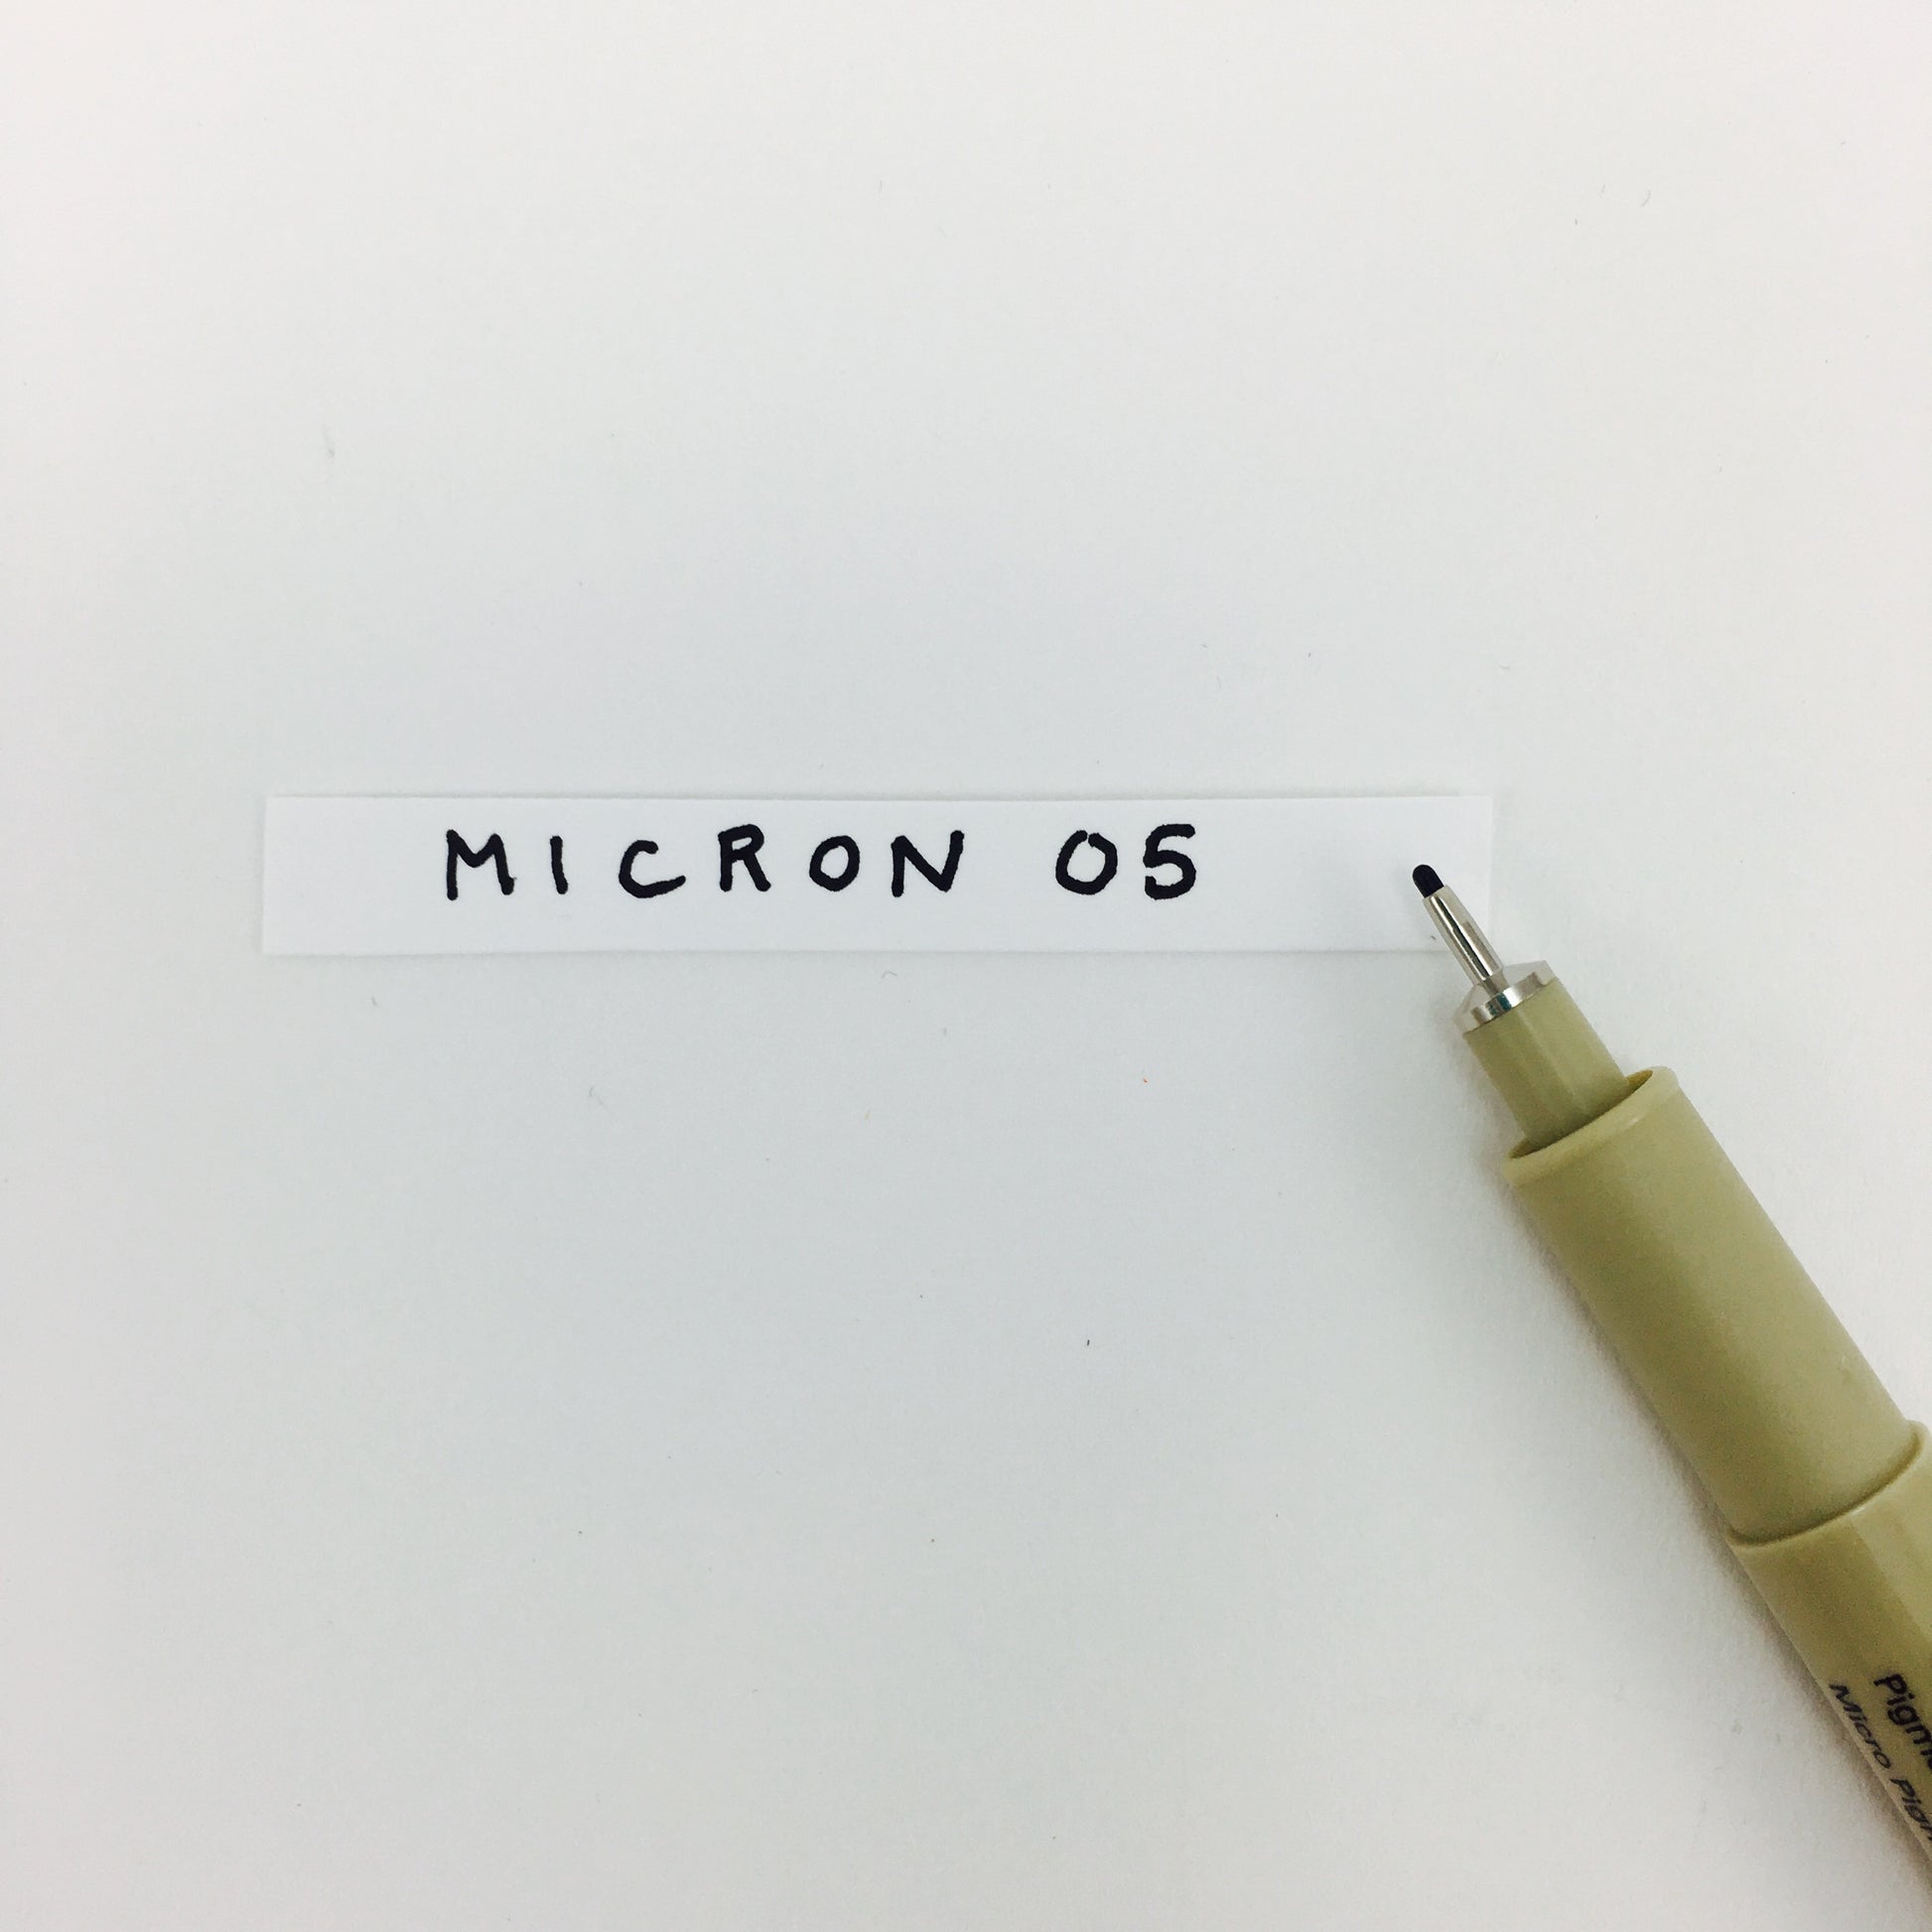 Pigma Micron Pen, O1  Sandra Brady Art - Scrimshaw